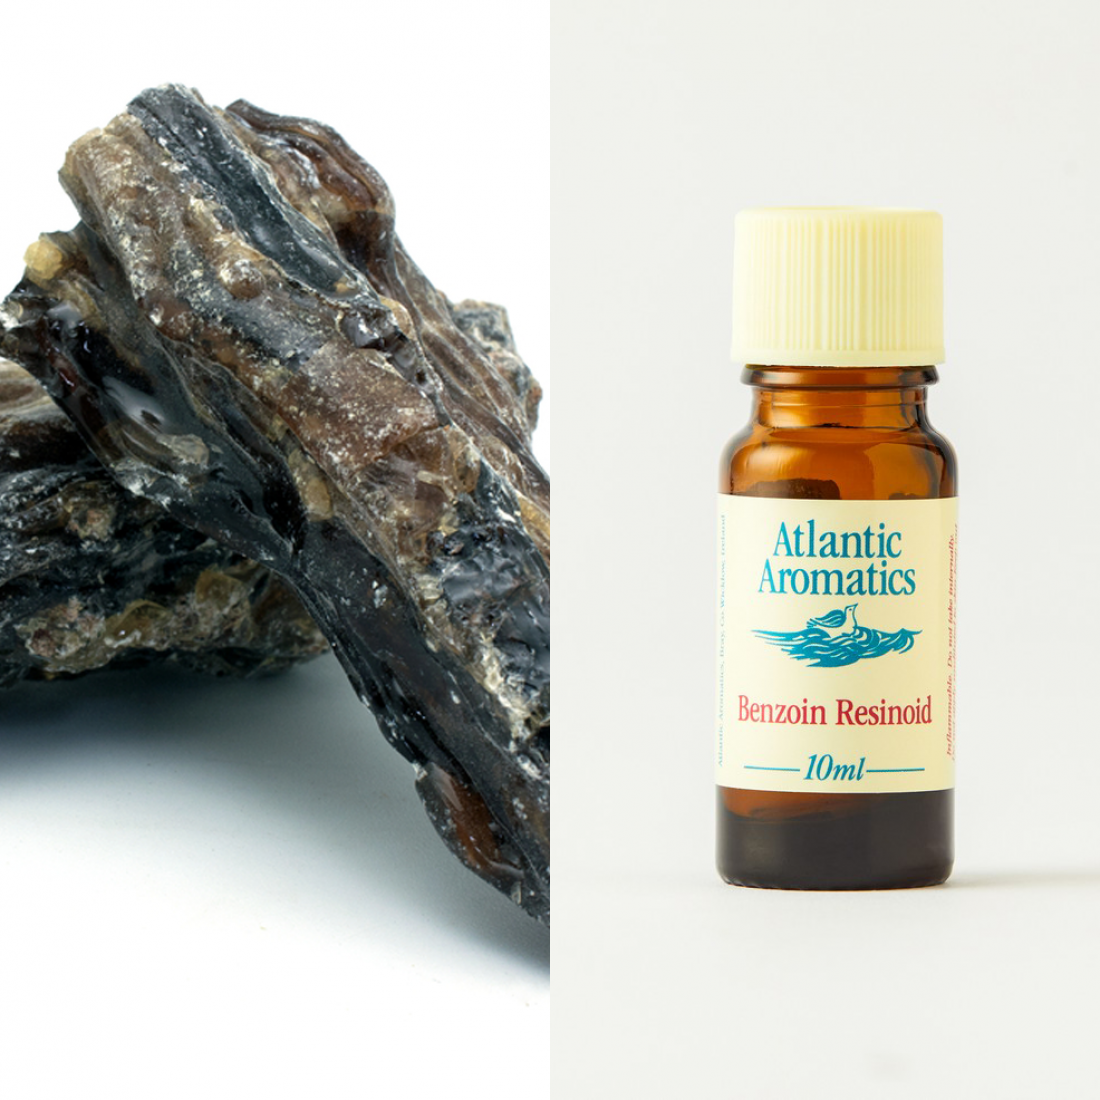 Atlantic Aromatics Benzoin Resinoid Oil 10ml